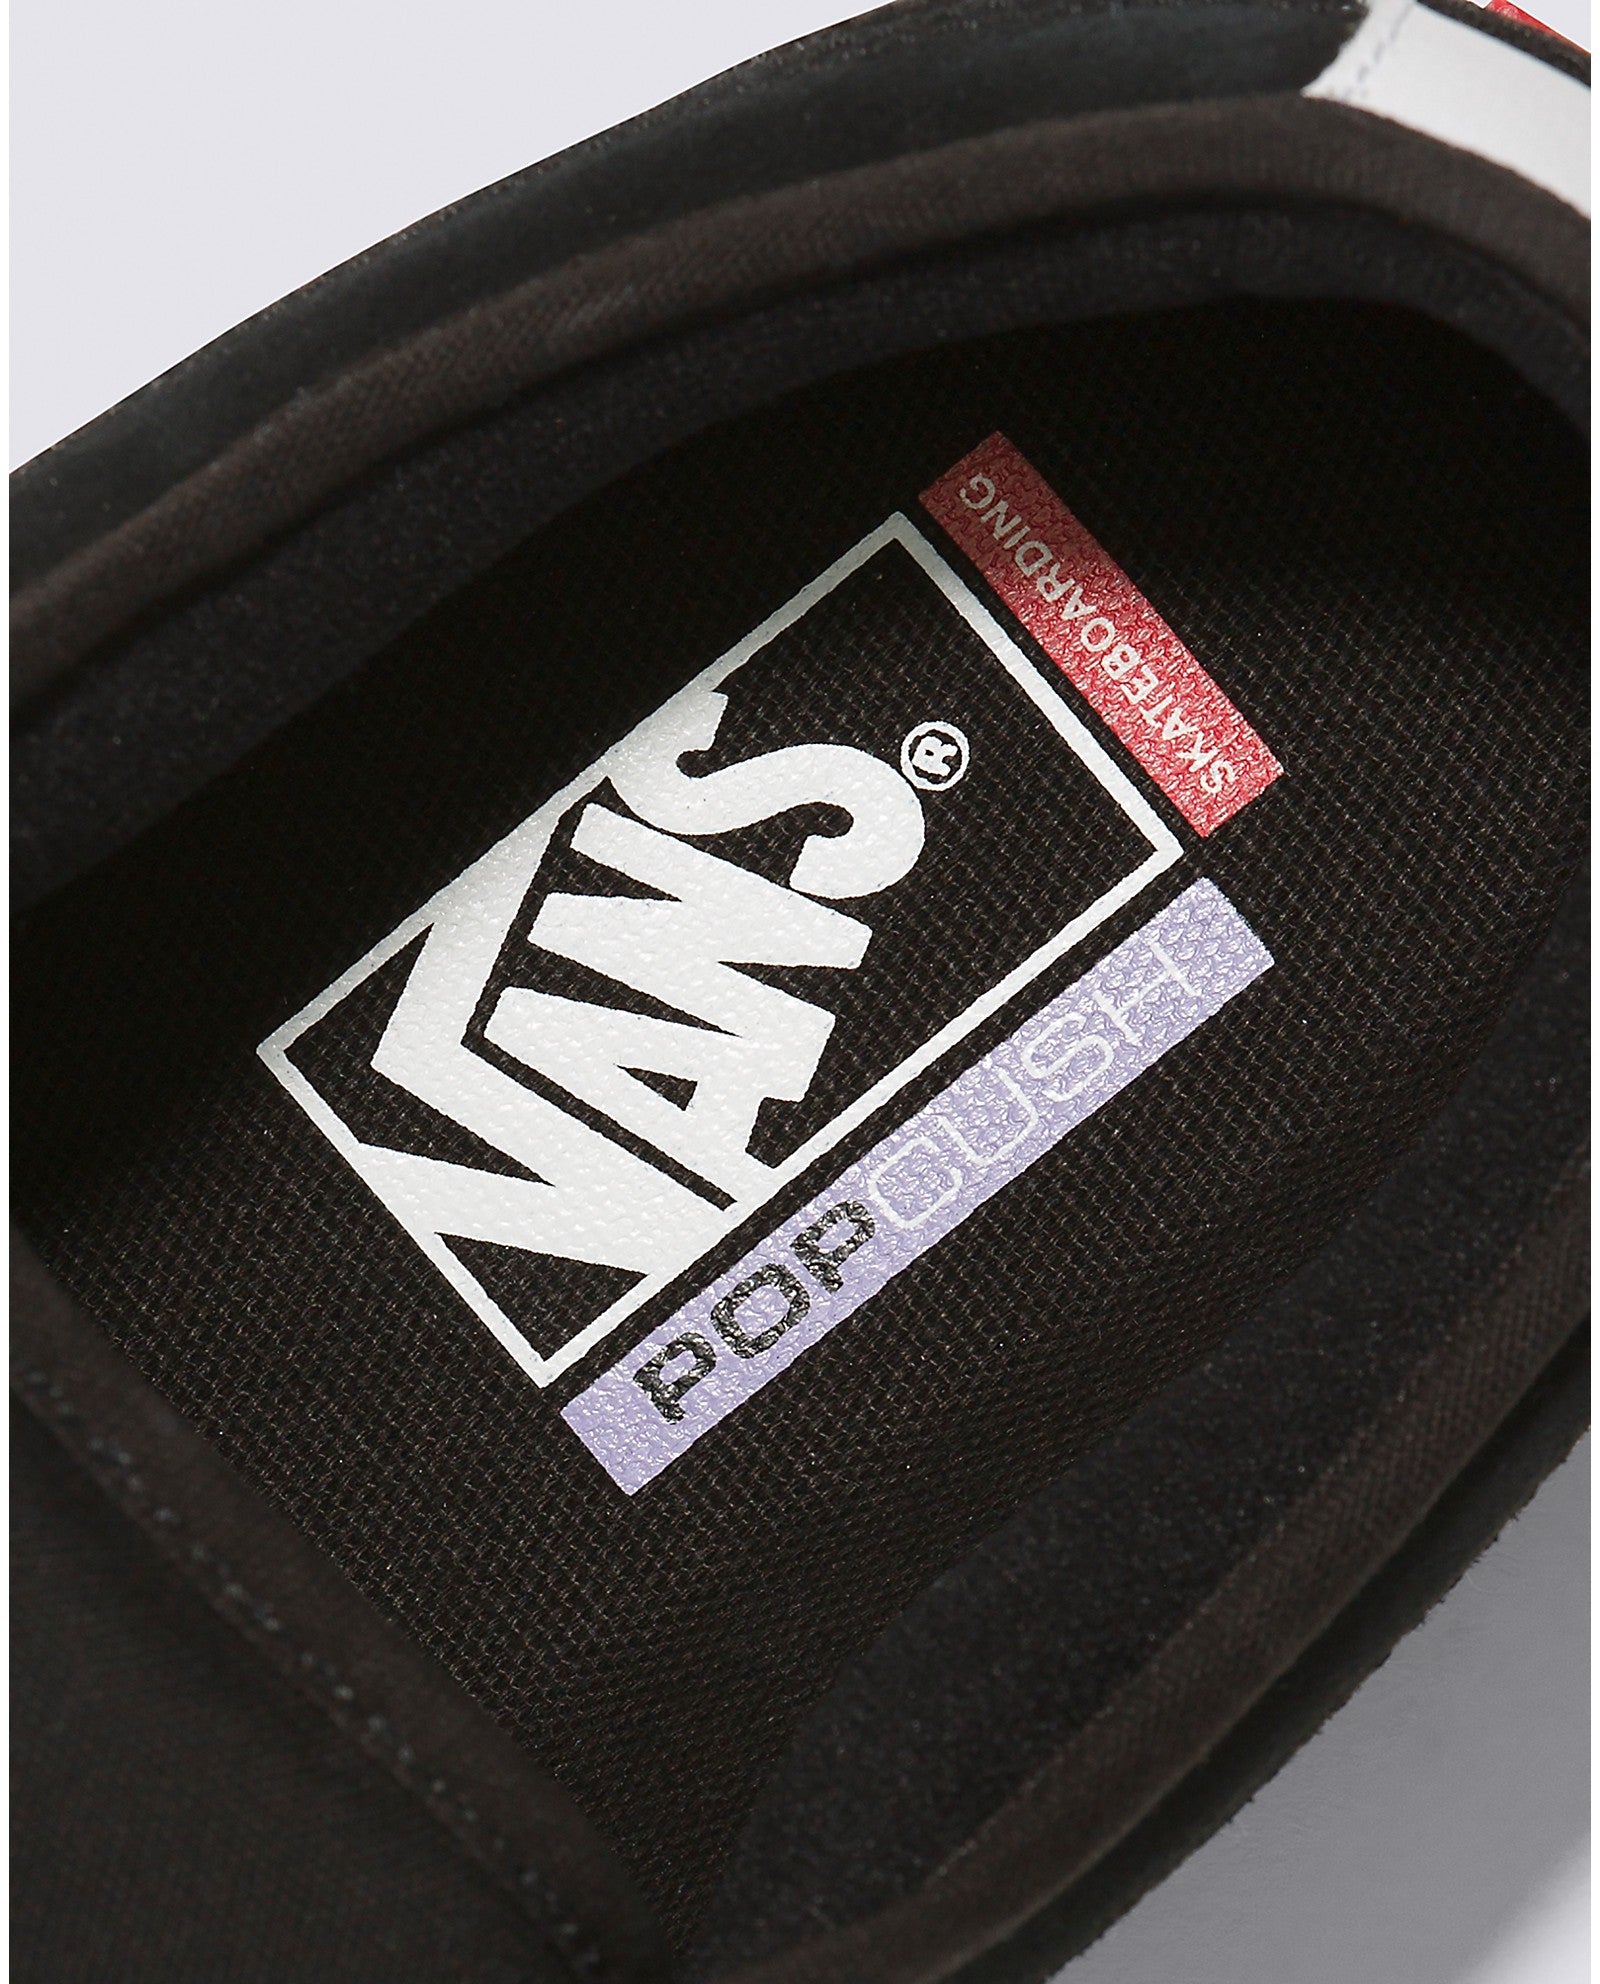 Black/Black/White Chukka Low Sidestripe Vans Skate Shoe Detail